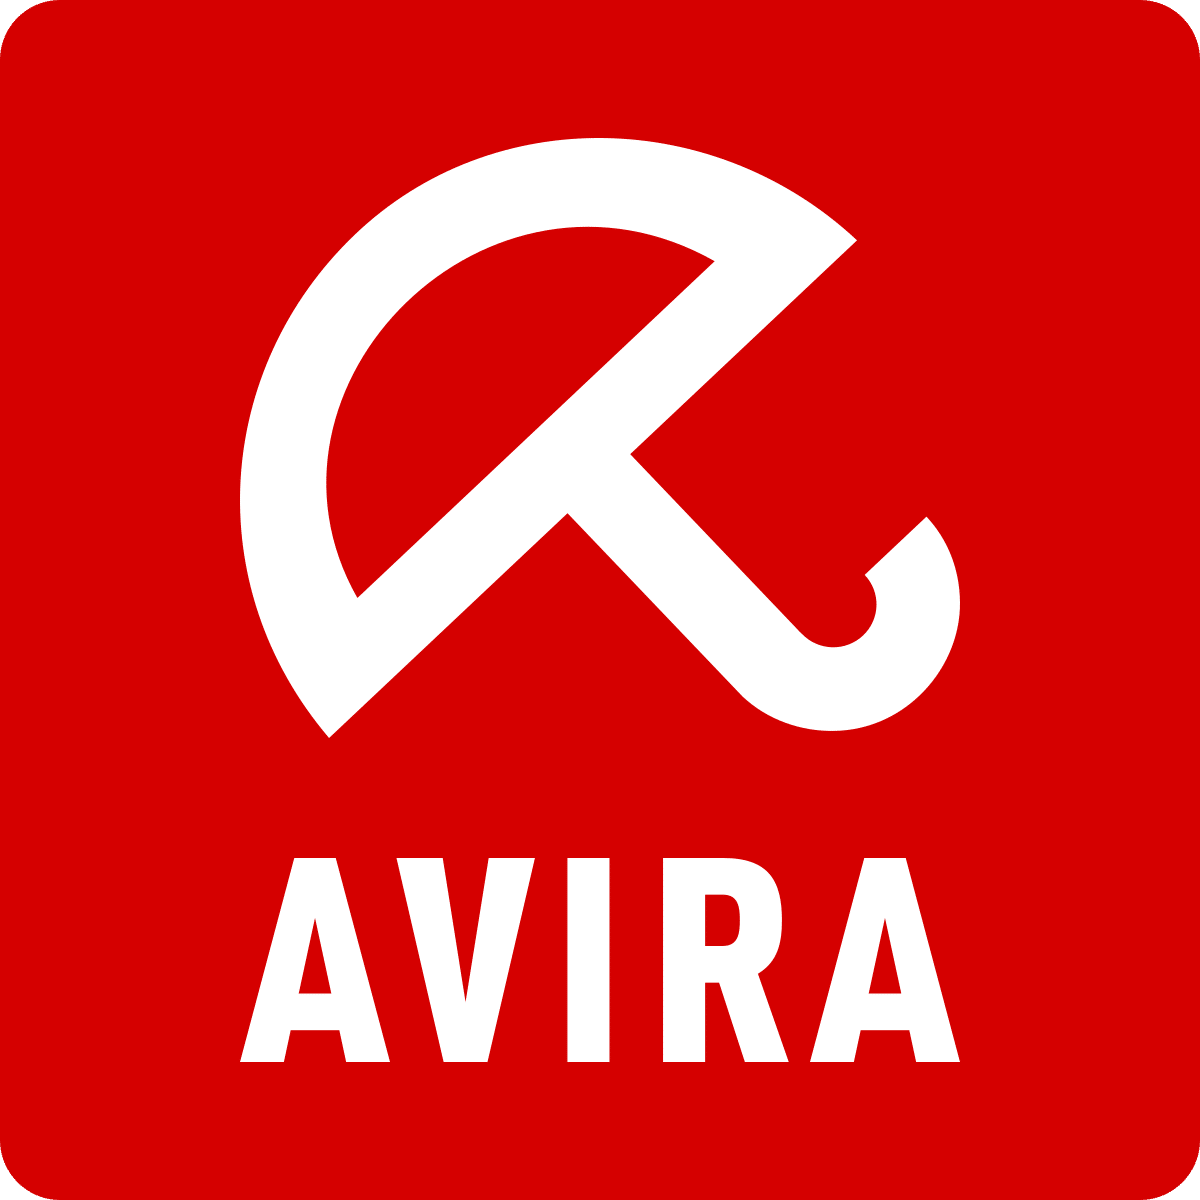 Avira Antivirus Offline Installer For Windows 7 & 10 64-Bit Download